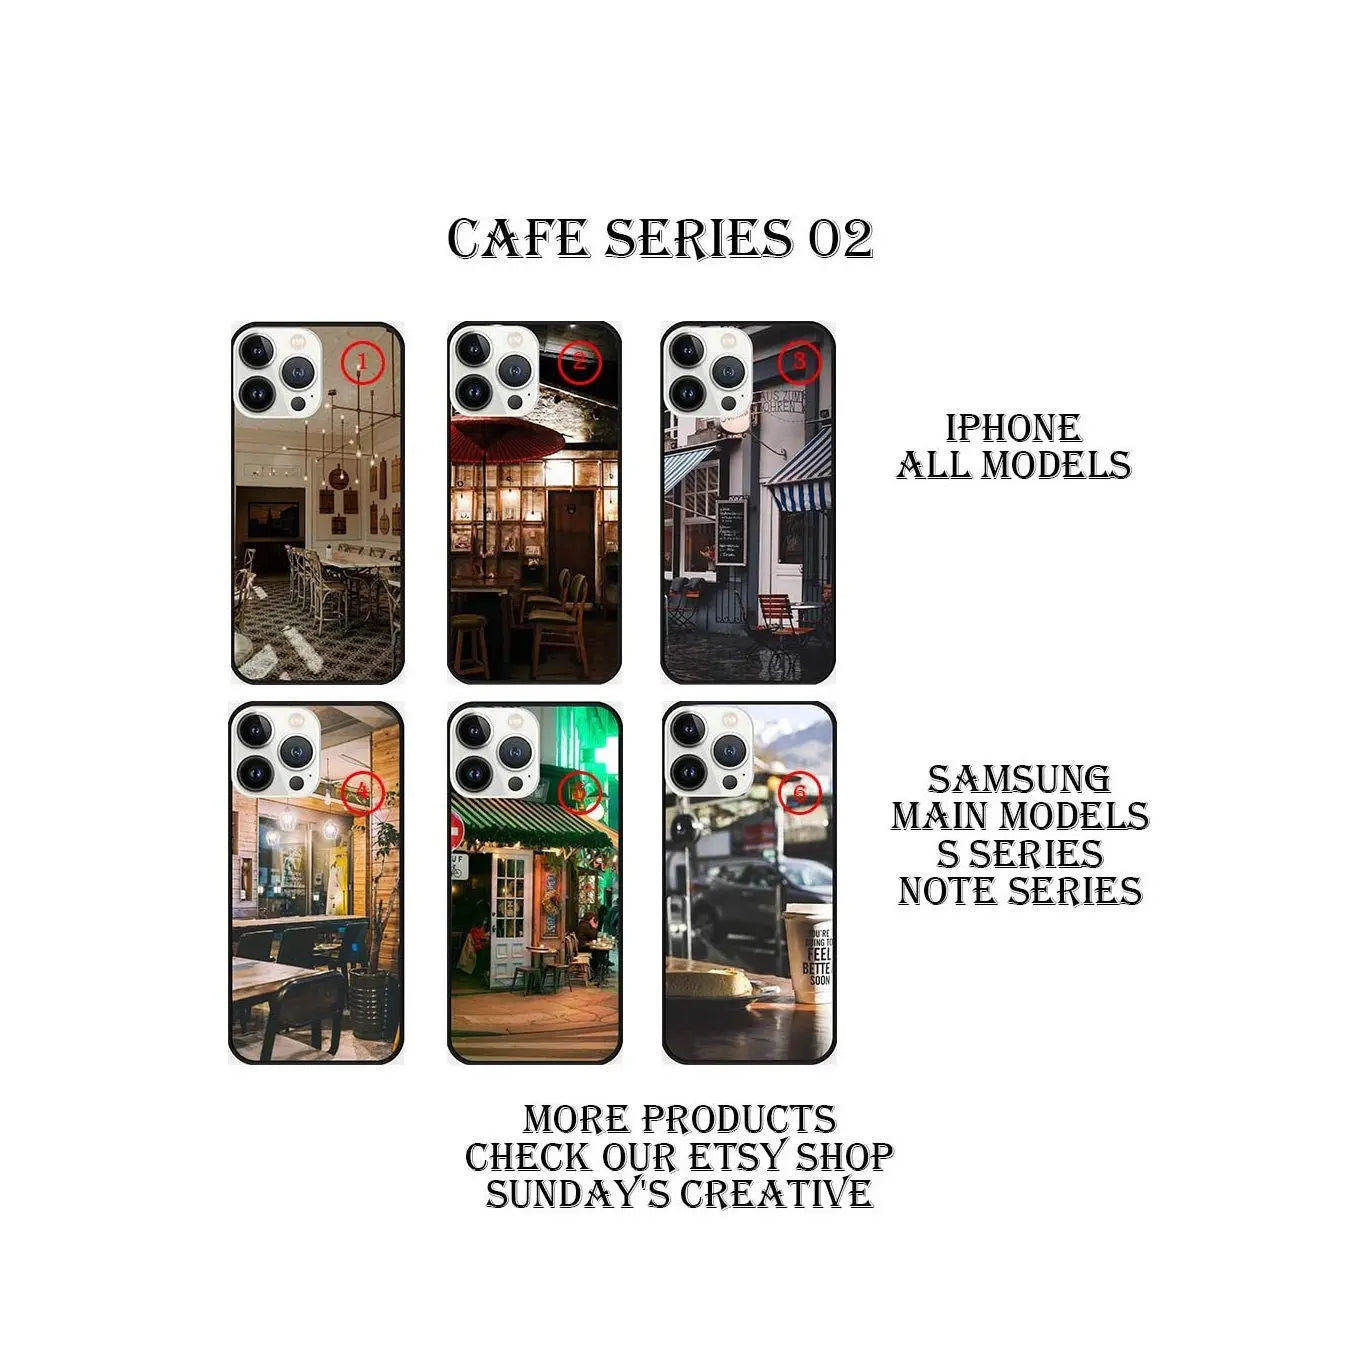 Designed phone cases Cafe series 02 Sunday's Creative